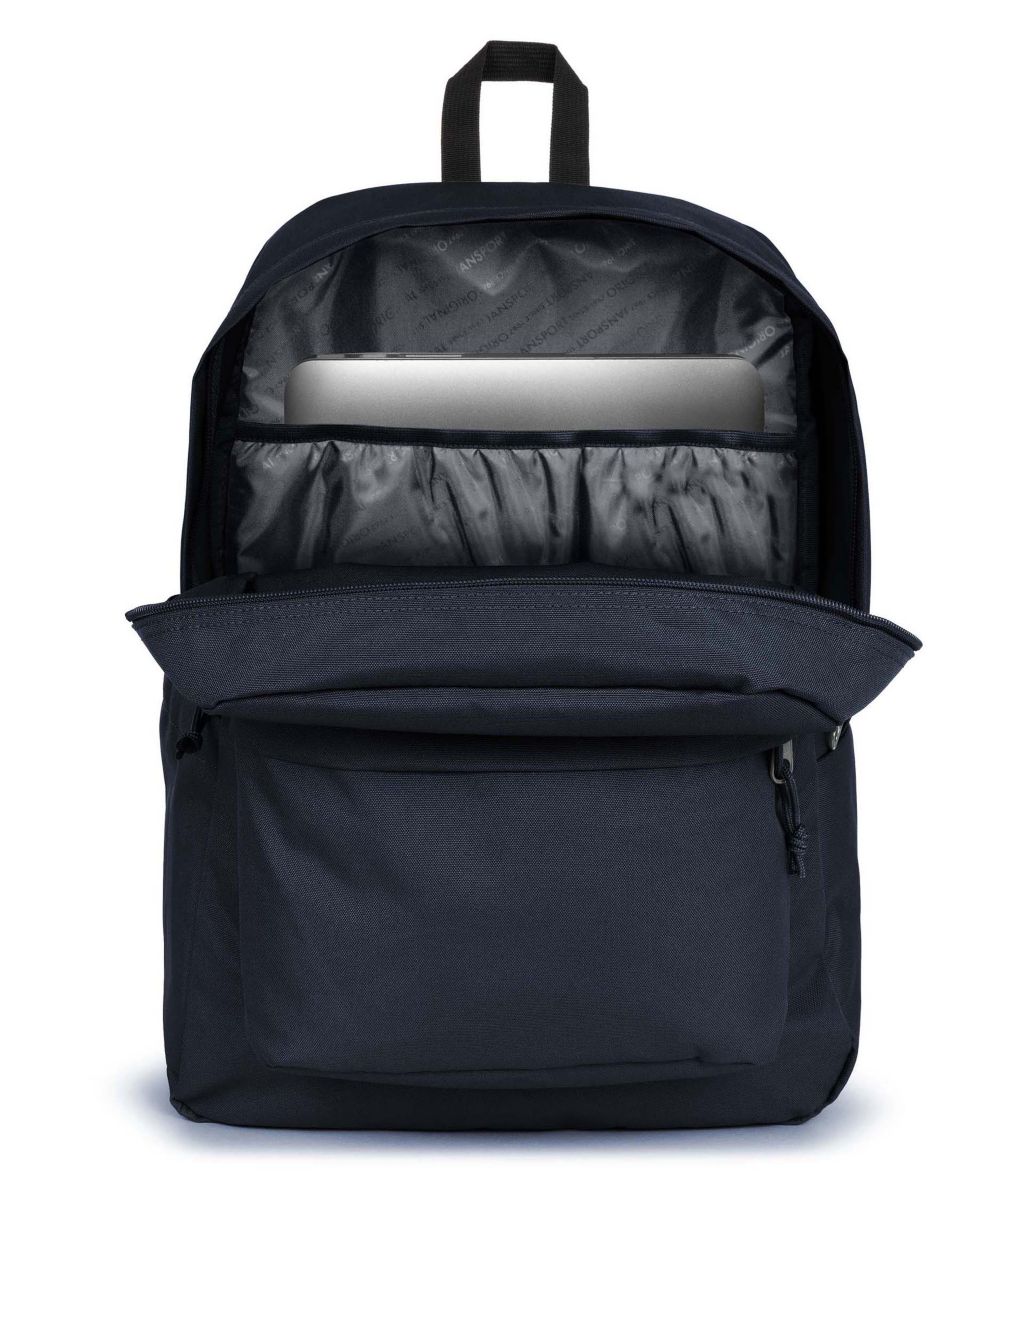 SuperBreak Plus Backpack image 3